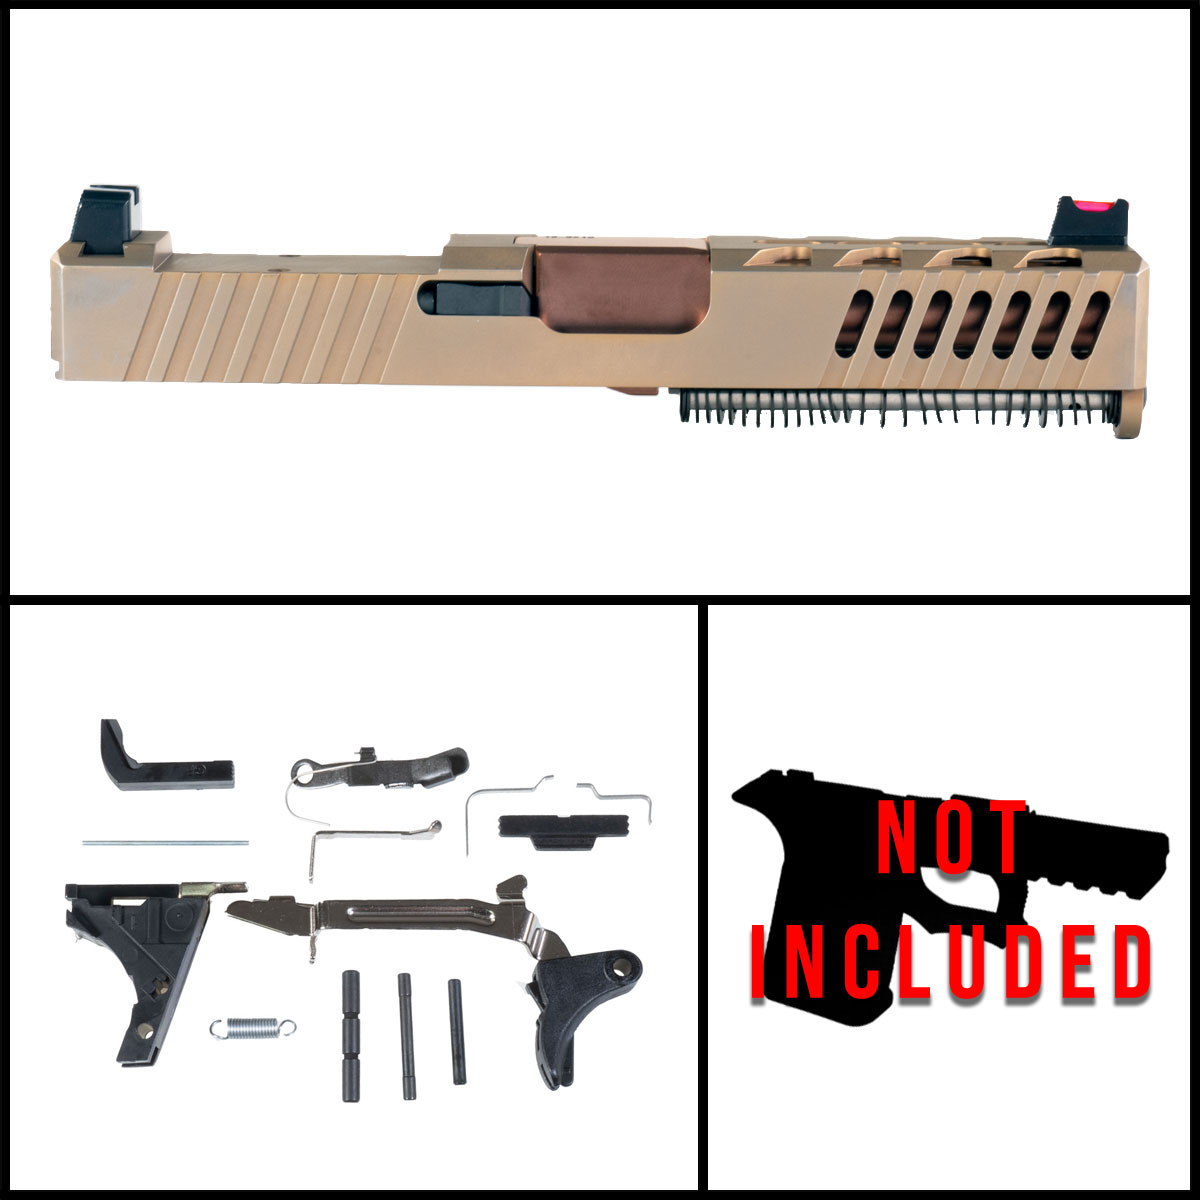 DTT 'CU-63' 9mm Full Pistol Build Kit (Everything Minus Frame) - Glock 19 Compatible